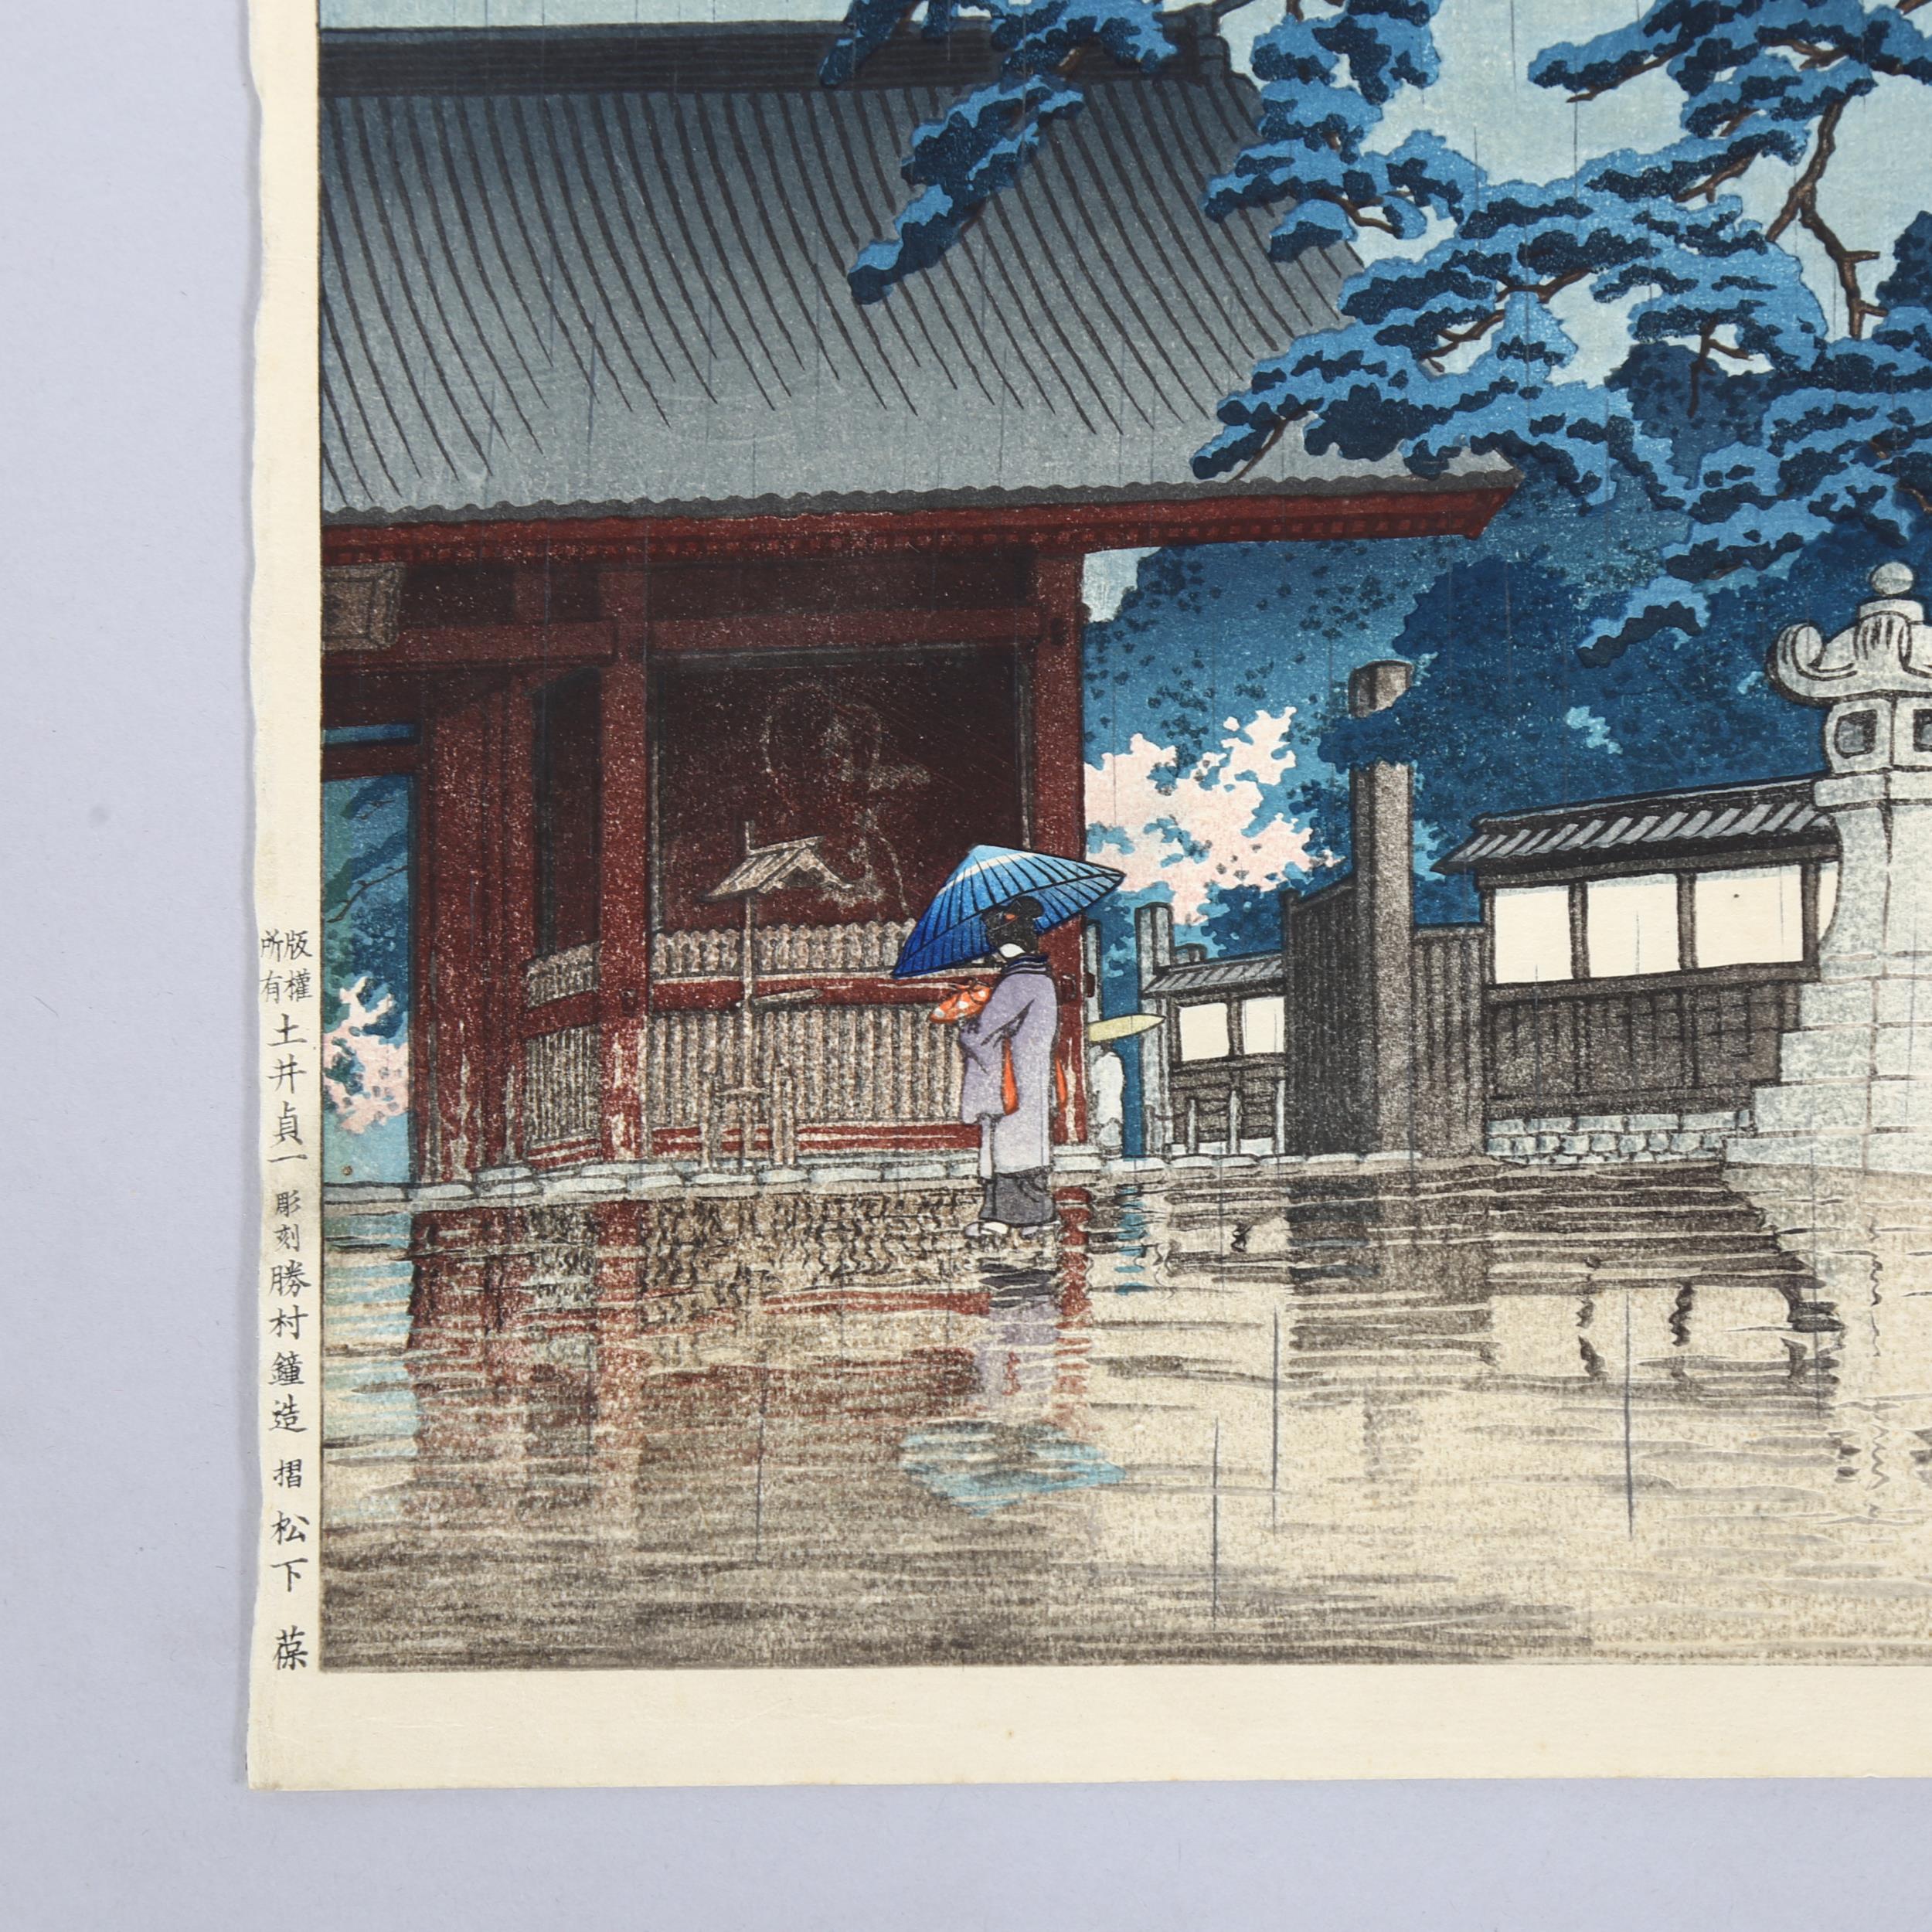 Kawase Hasui (1883 - 1957), spring rain Gokoku temple, woodblock print, published 1932, image 36cm x - Image 3 of 4